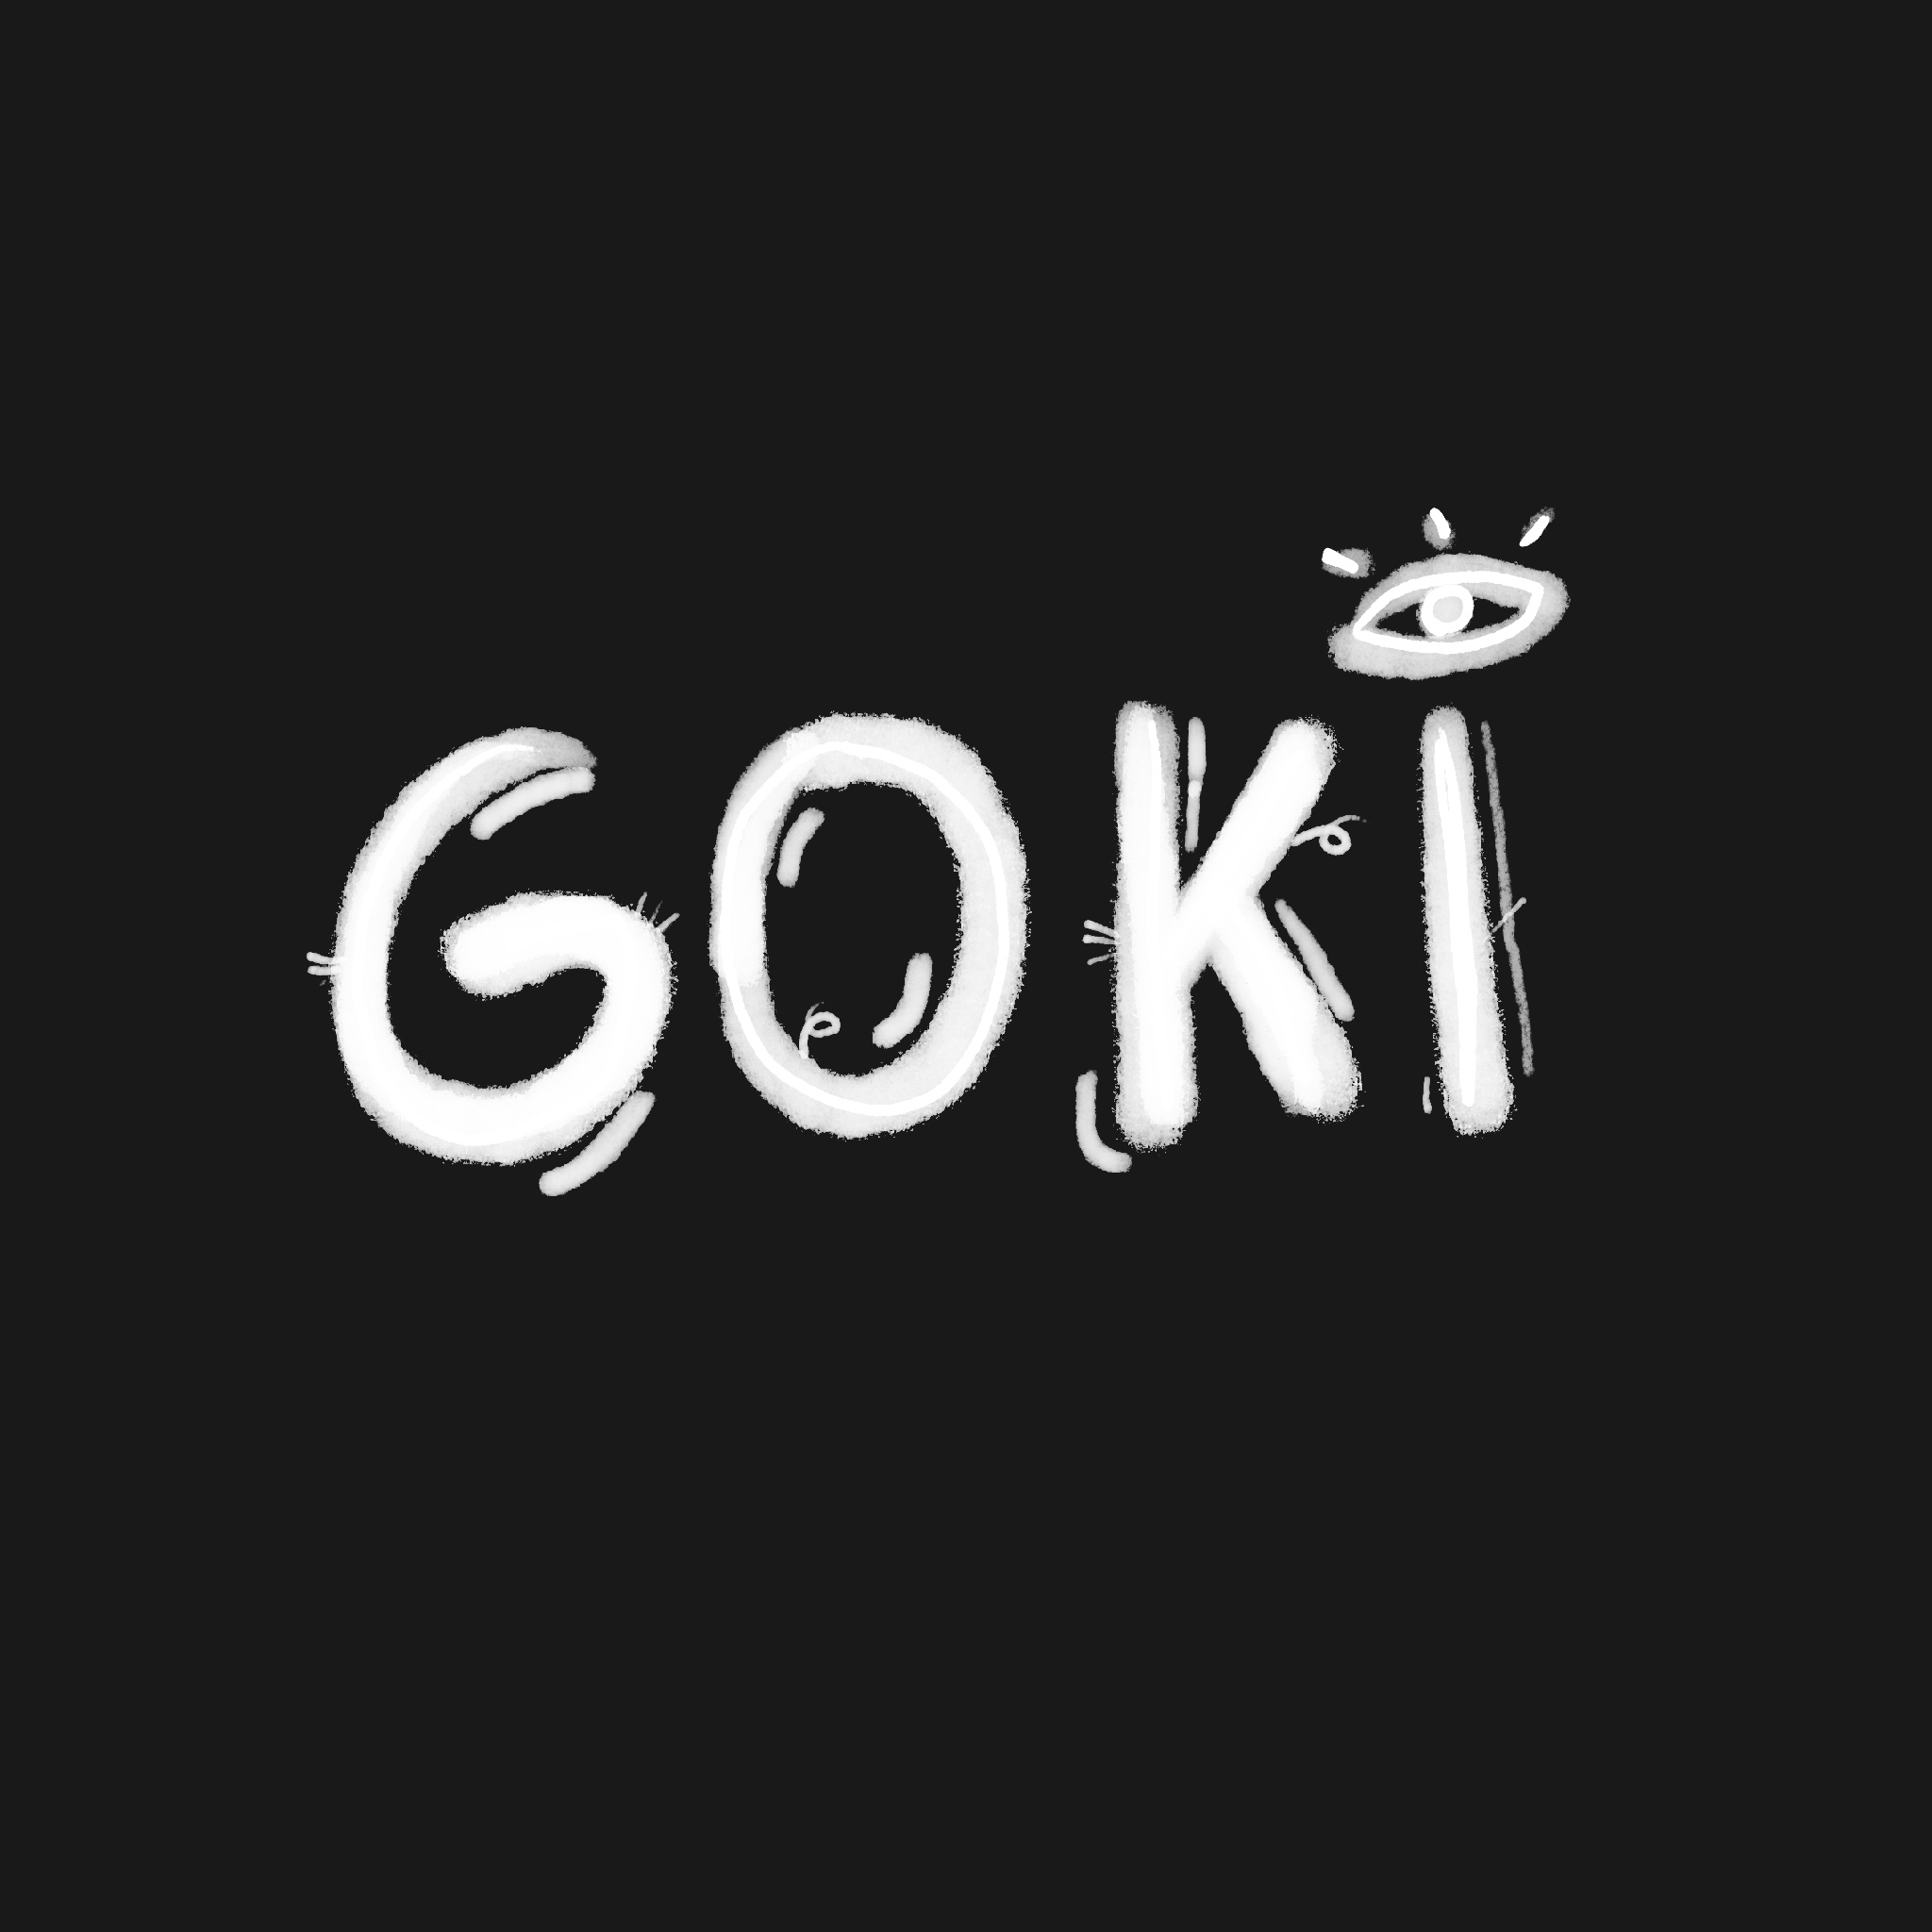 We Are Goki